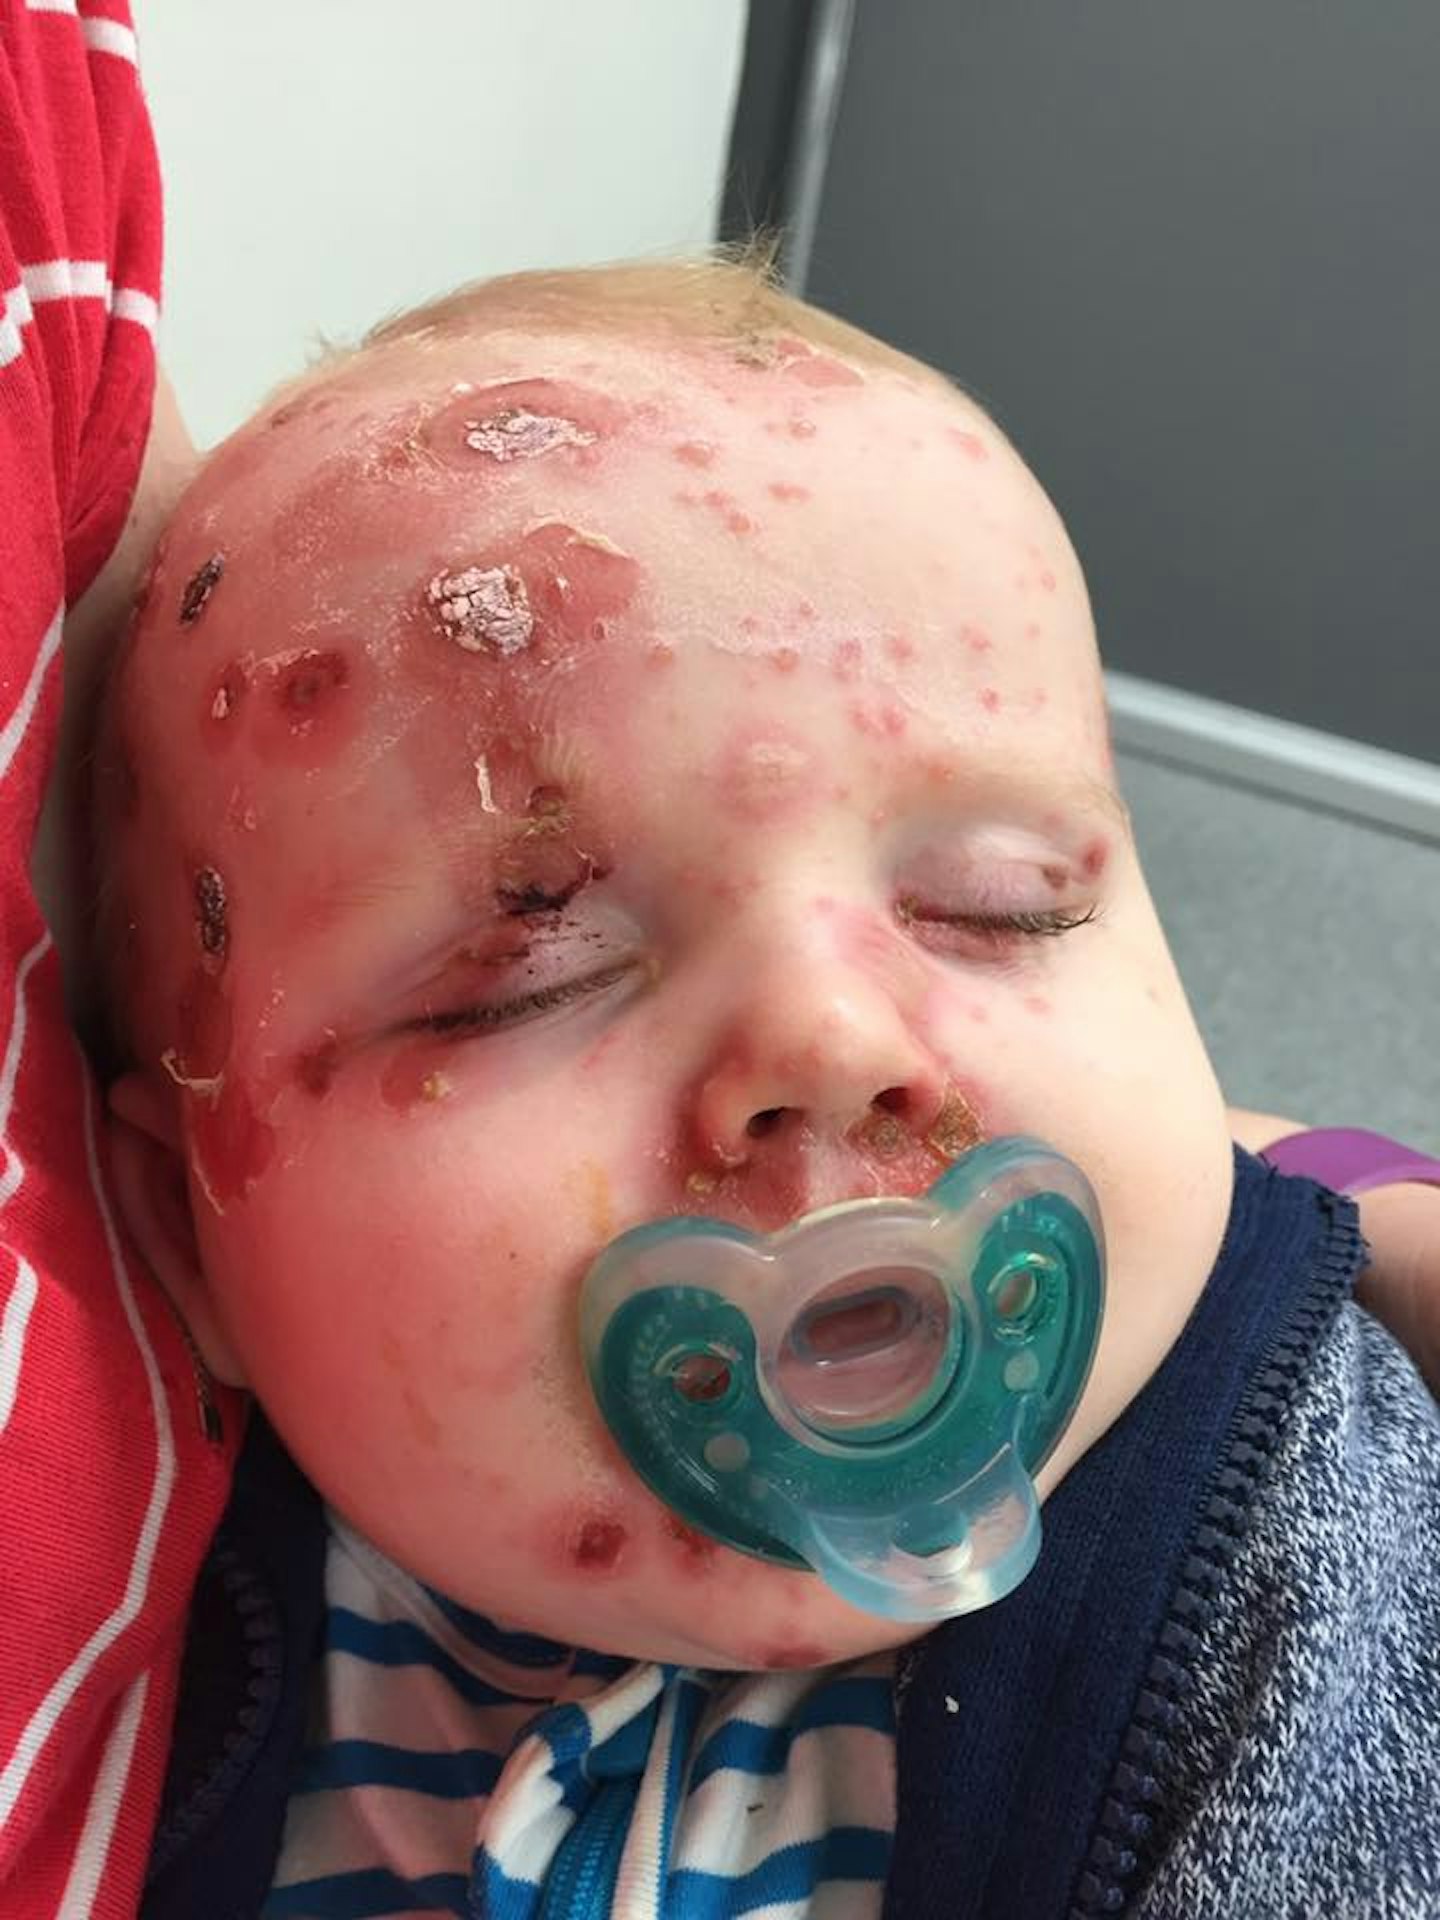 Child with extreme chickenpox